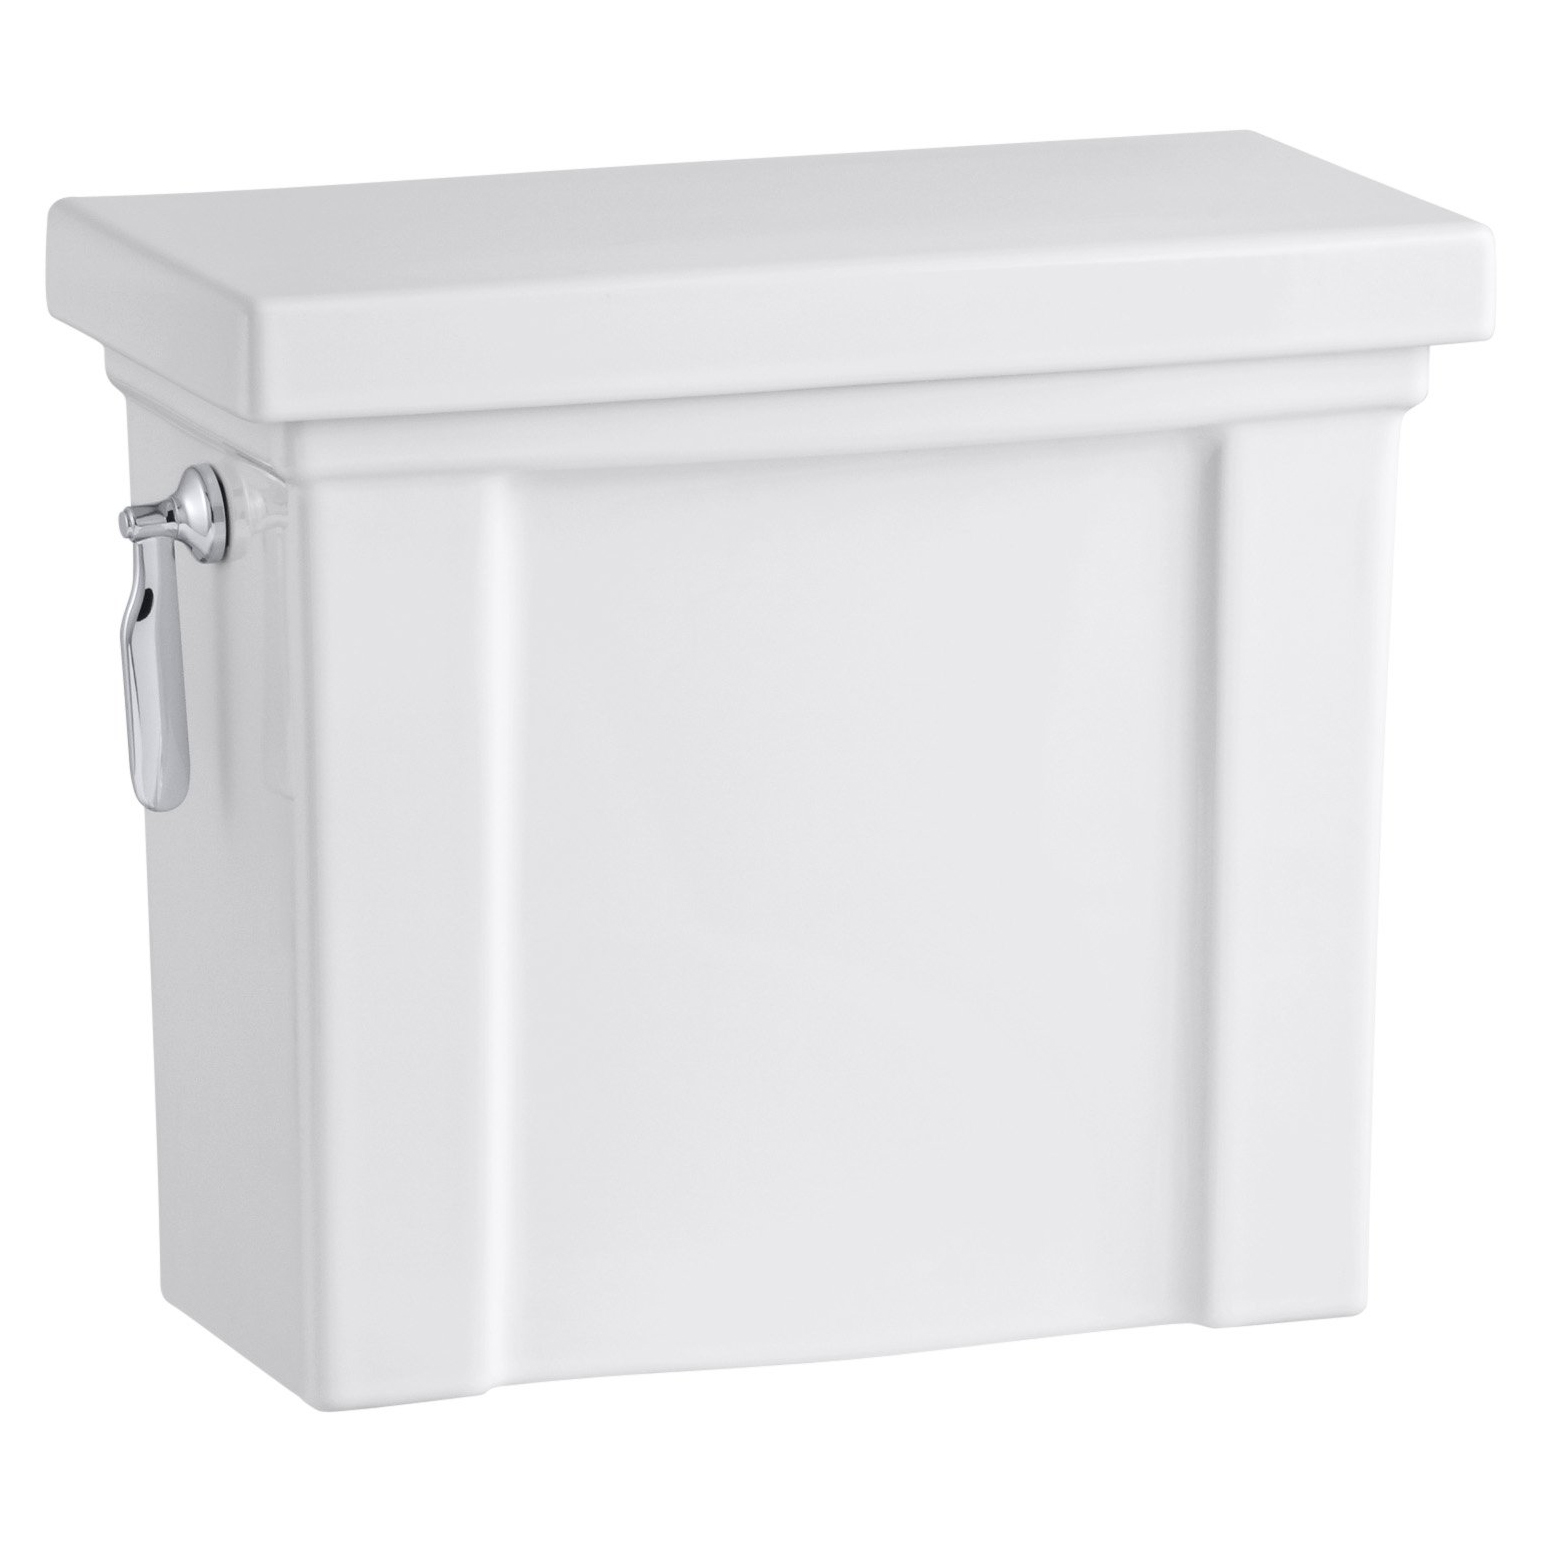 Tresham 1.28 Toilet Tank in White